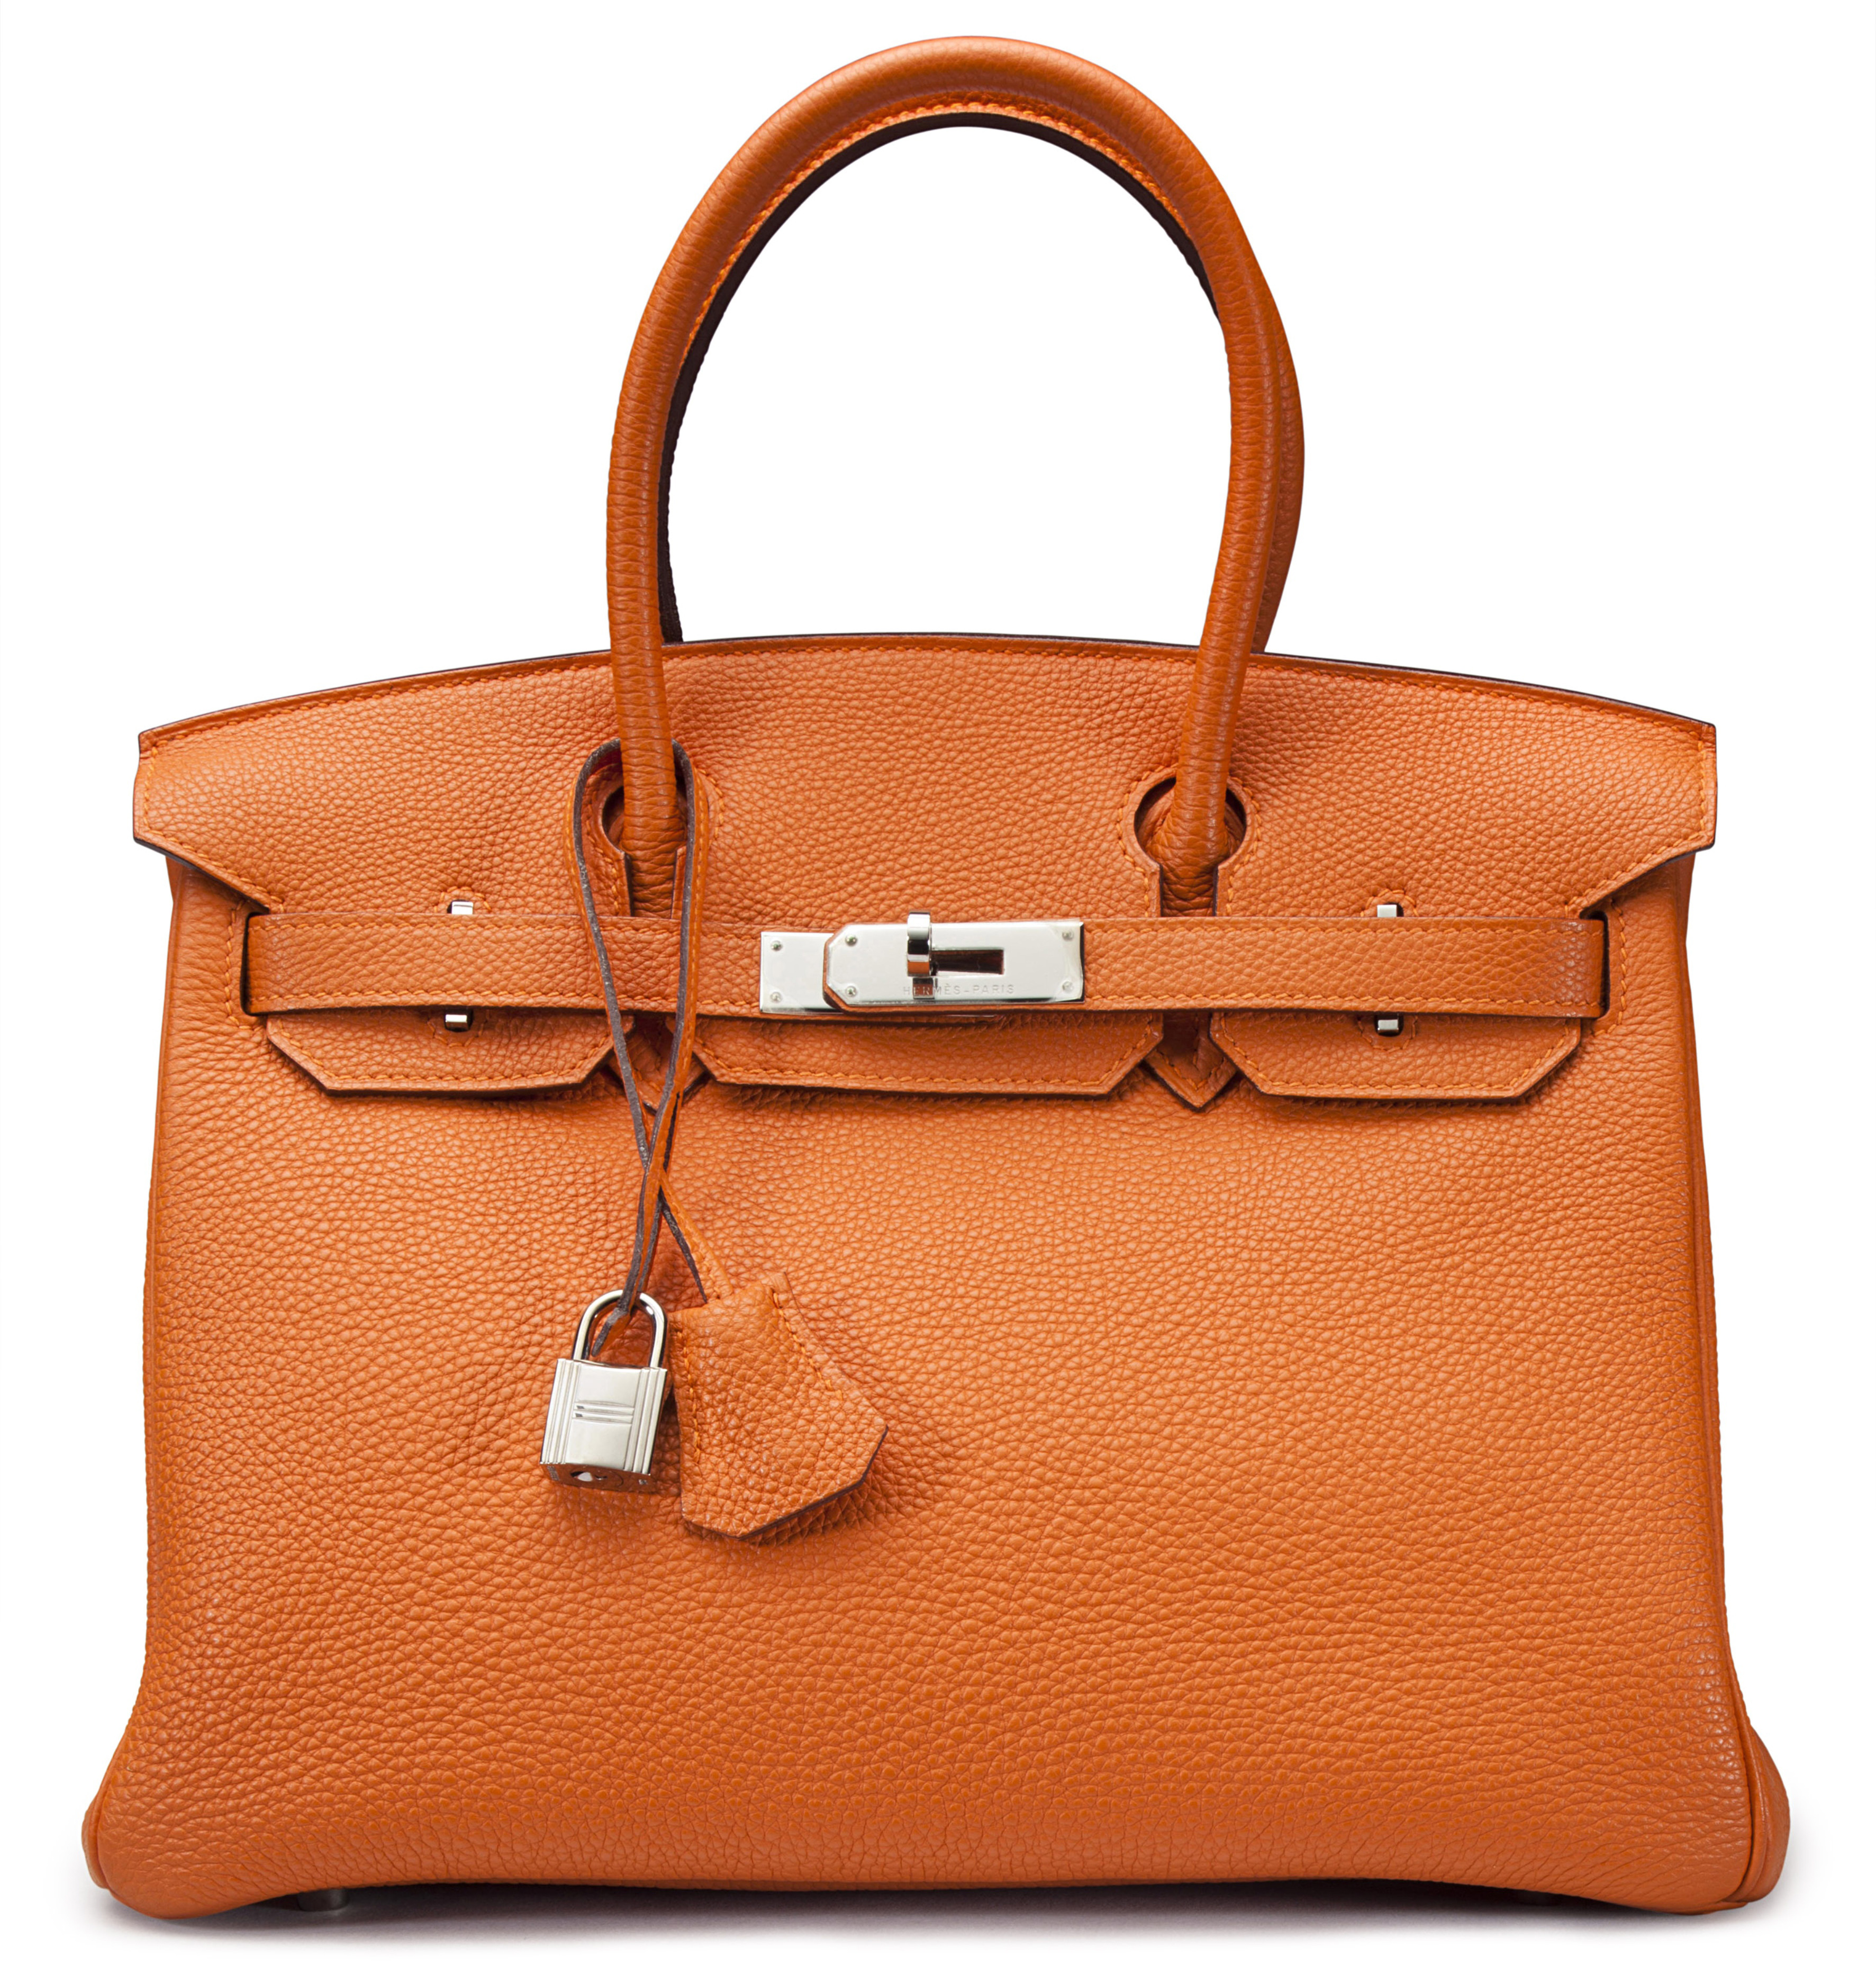 Hermes Birkin Bag, More Than Just a Bag | www.bagsaleusa.com